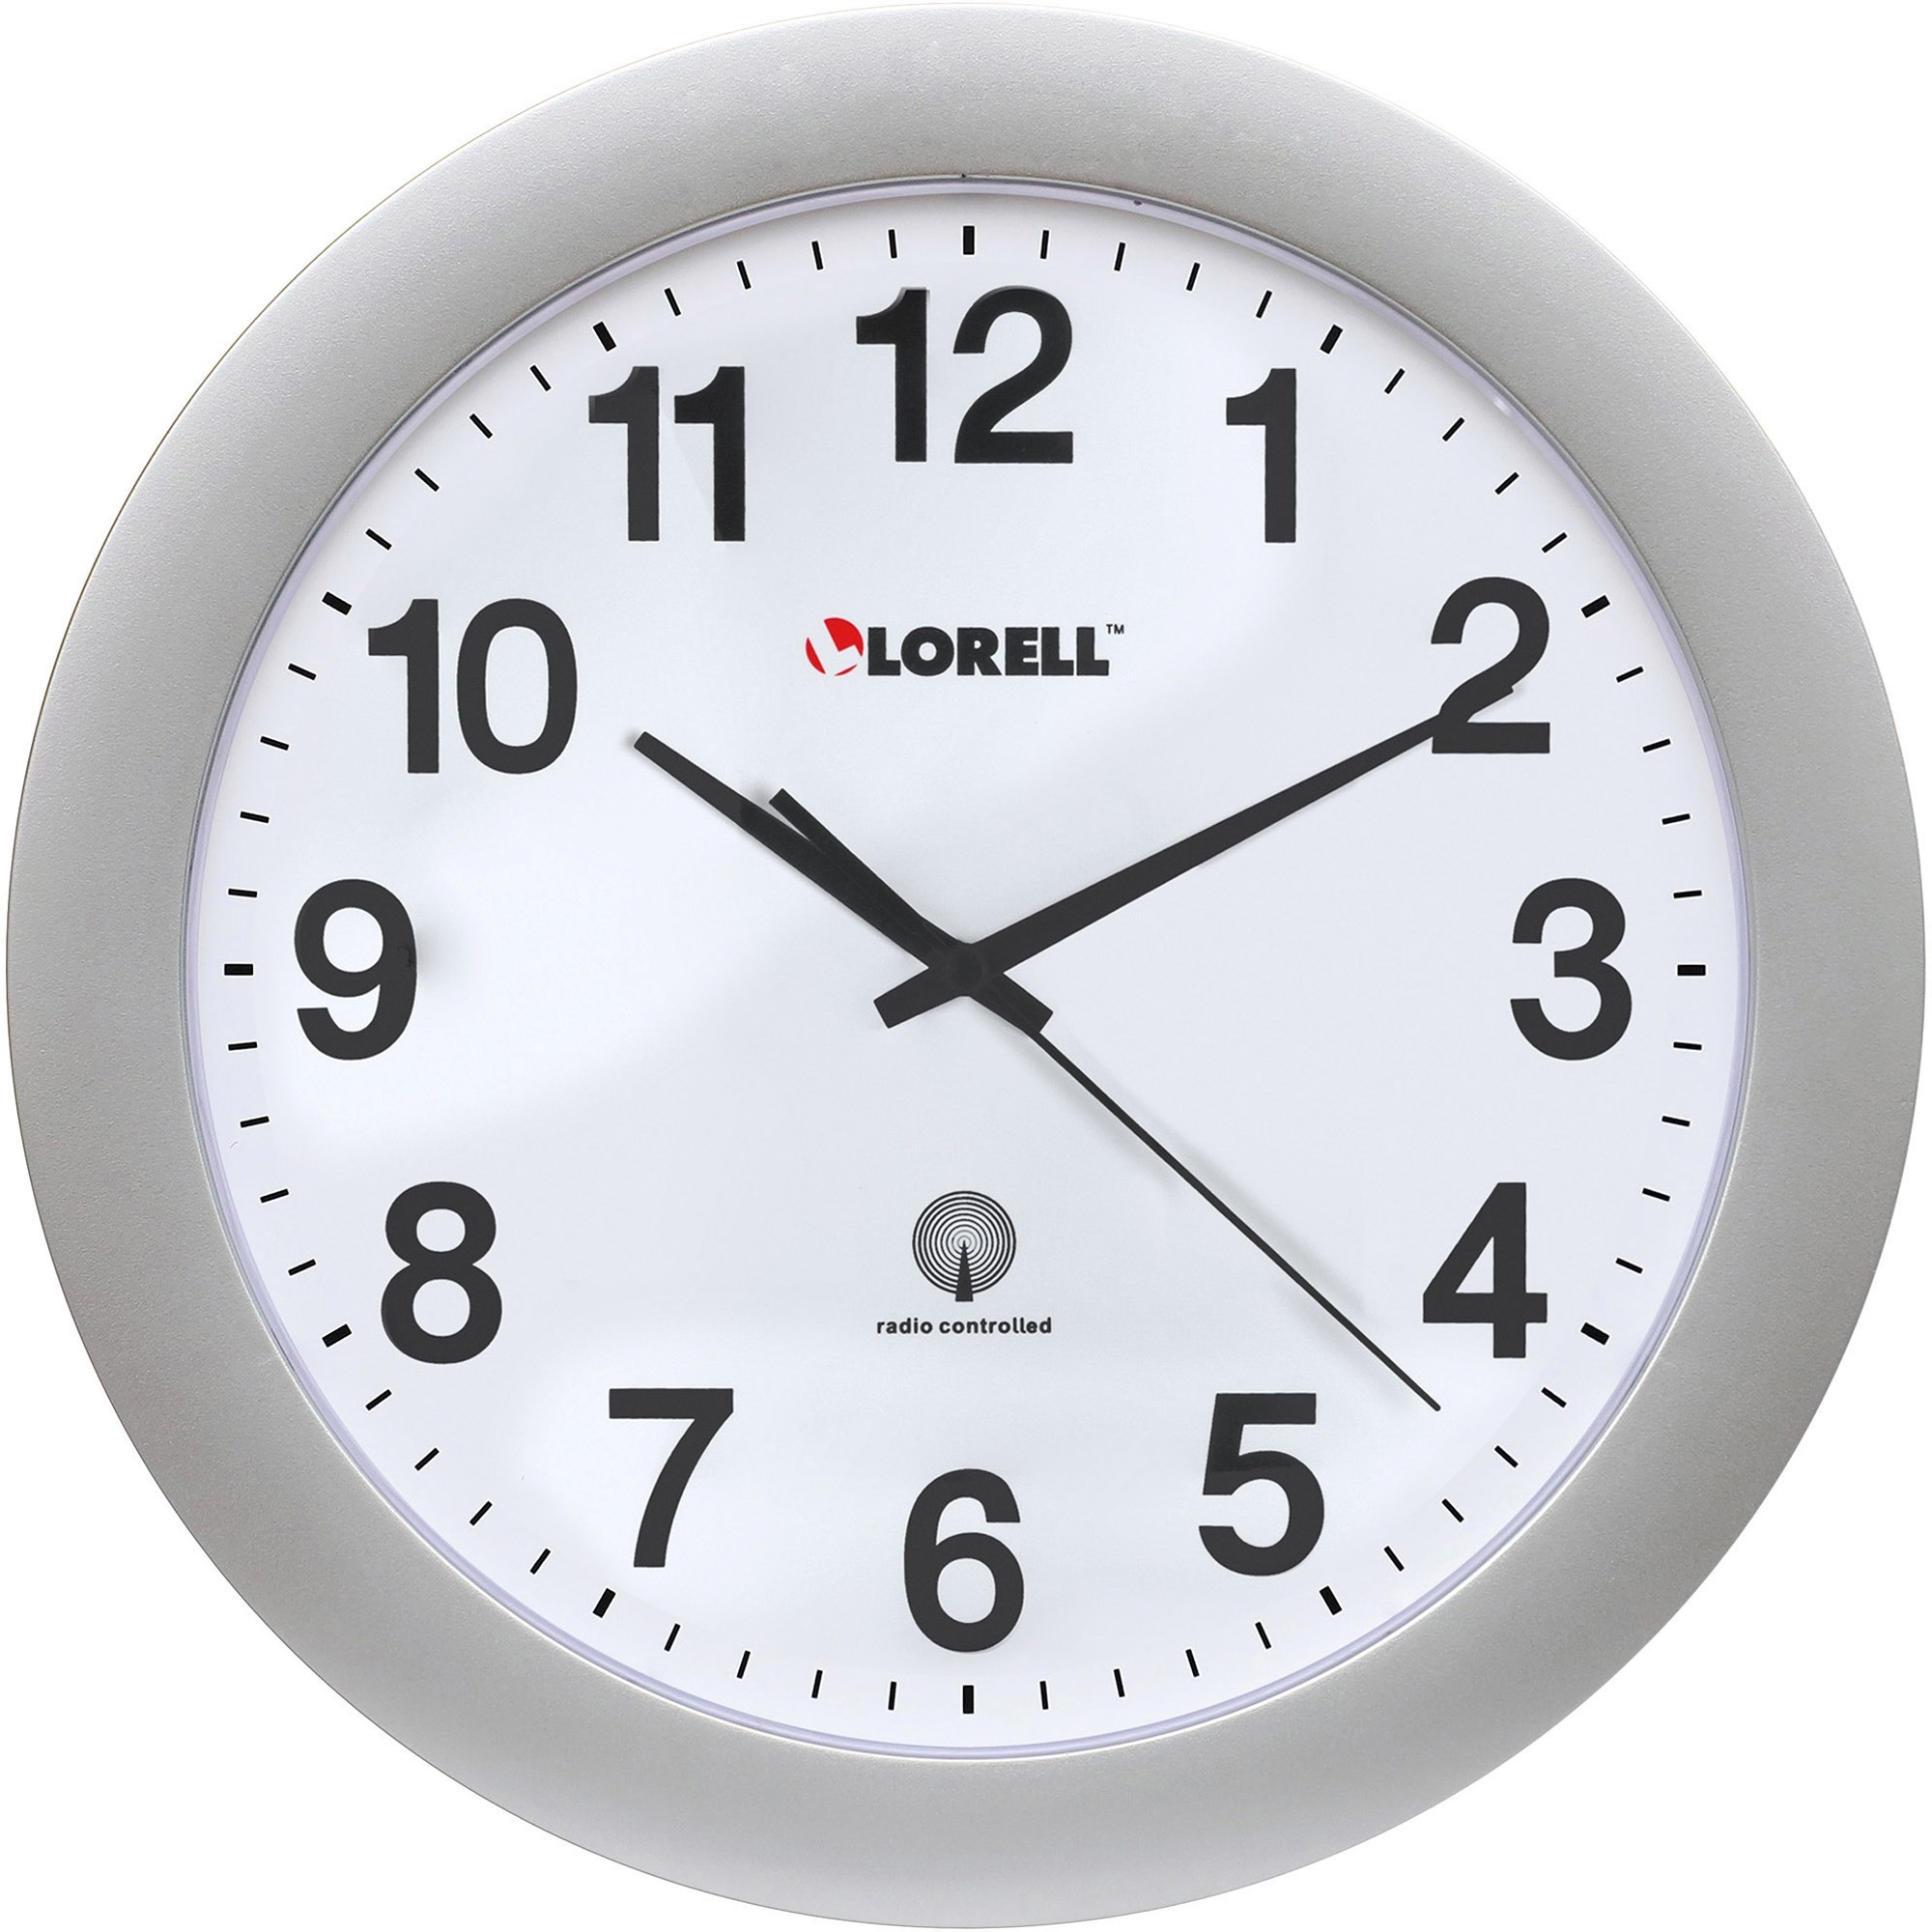 Lorell 12 Round Radio-controlled Wall Clock - Analog - Quartz - Atomic